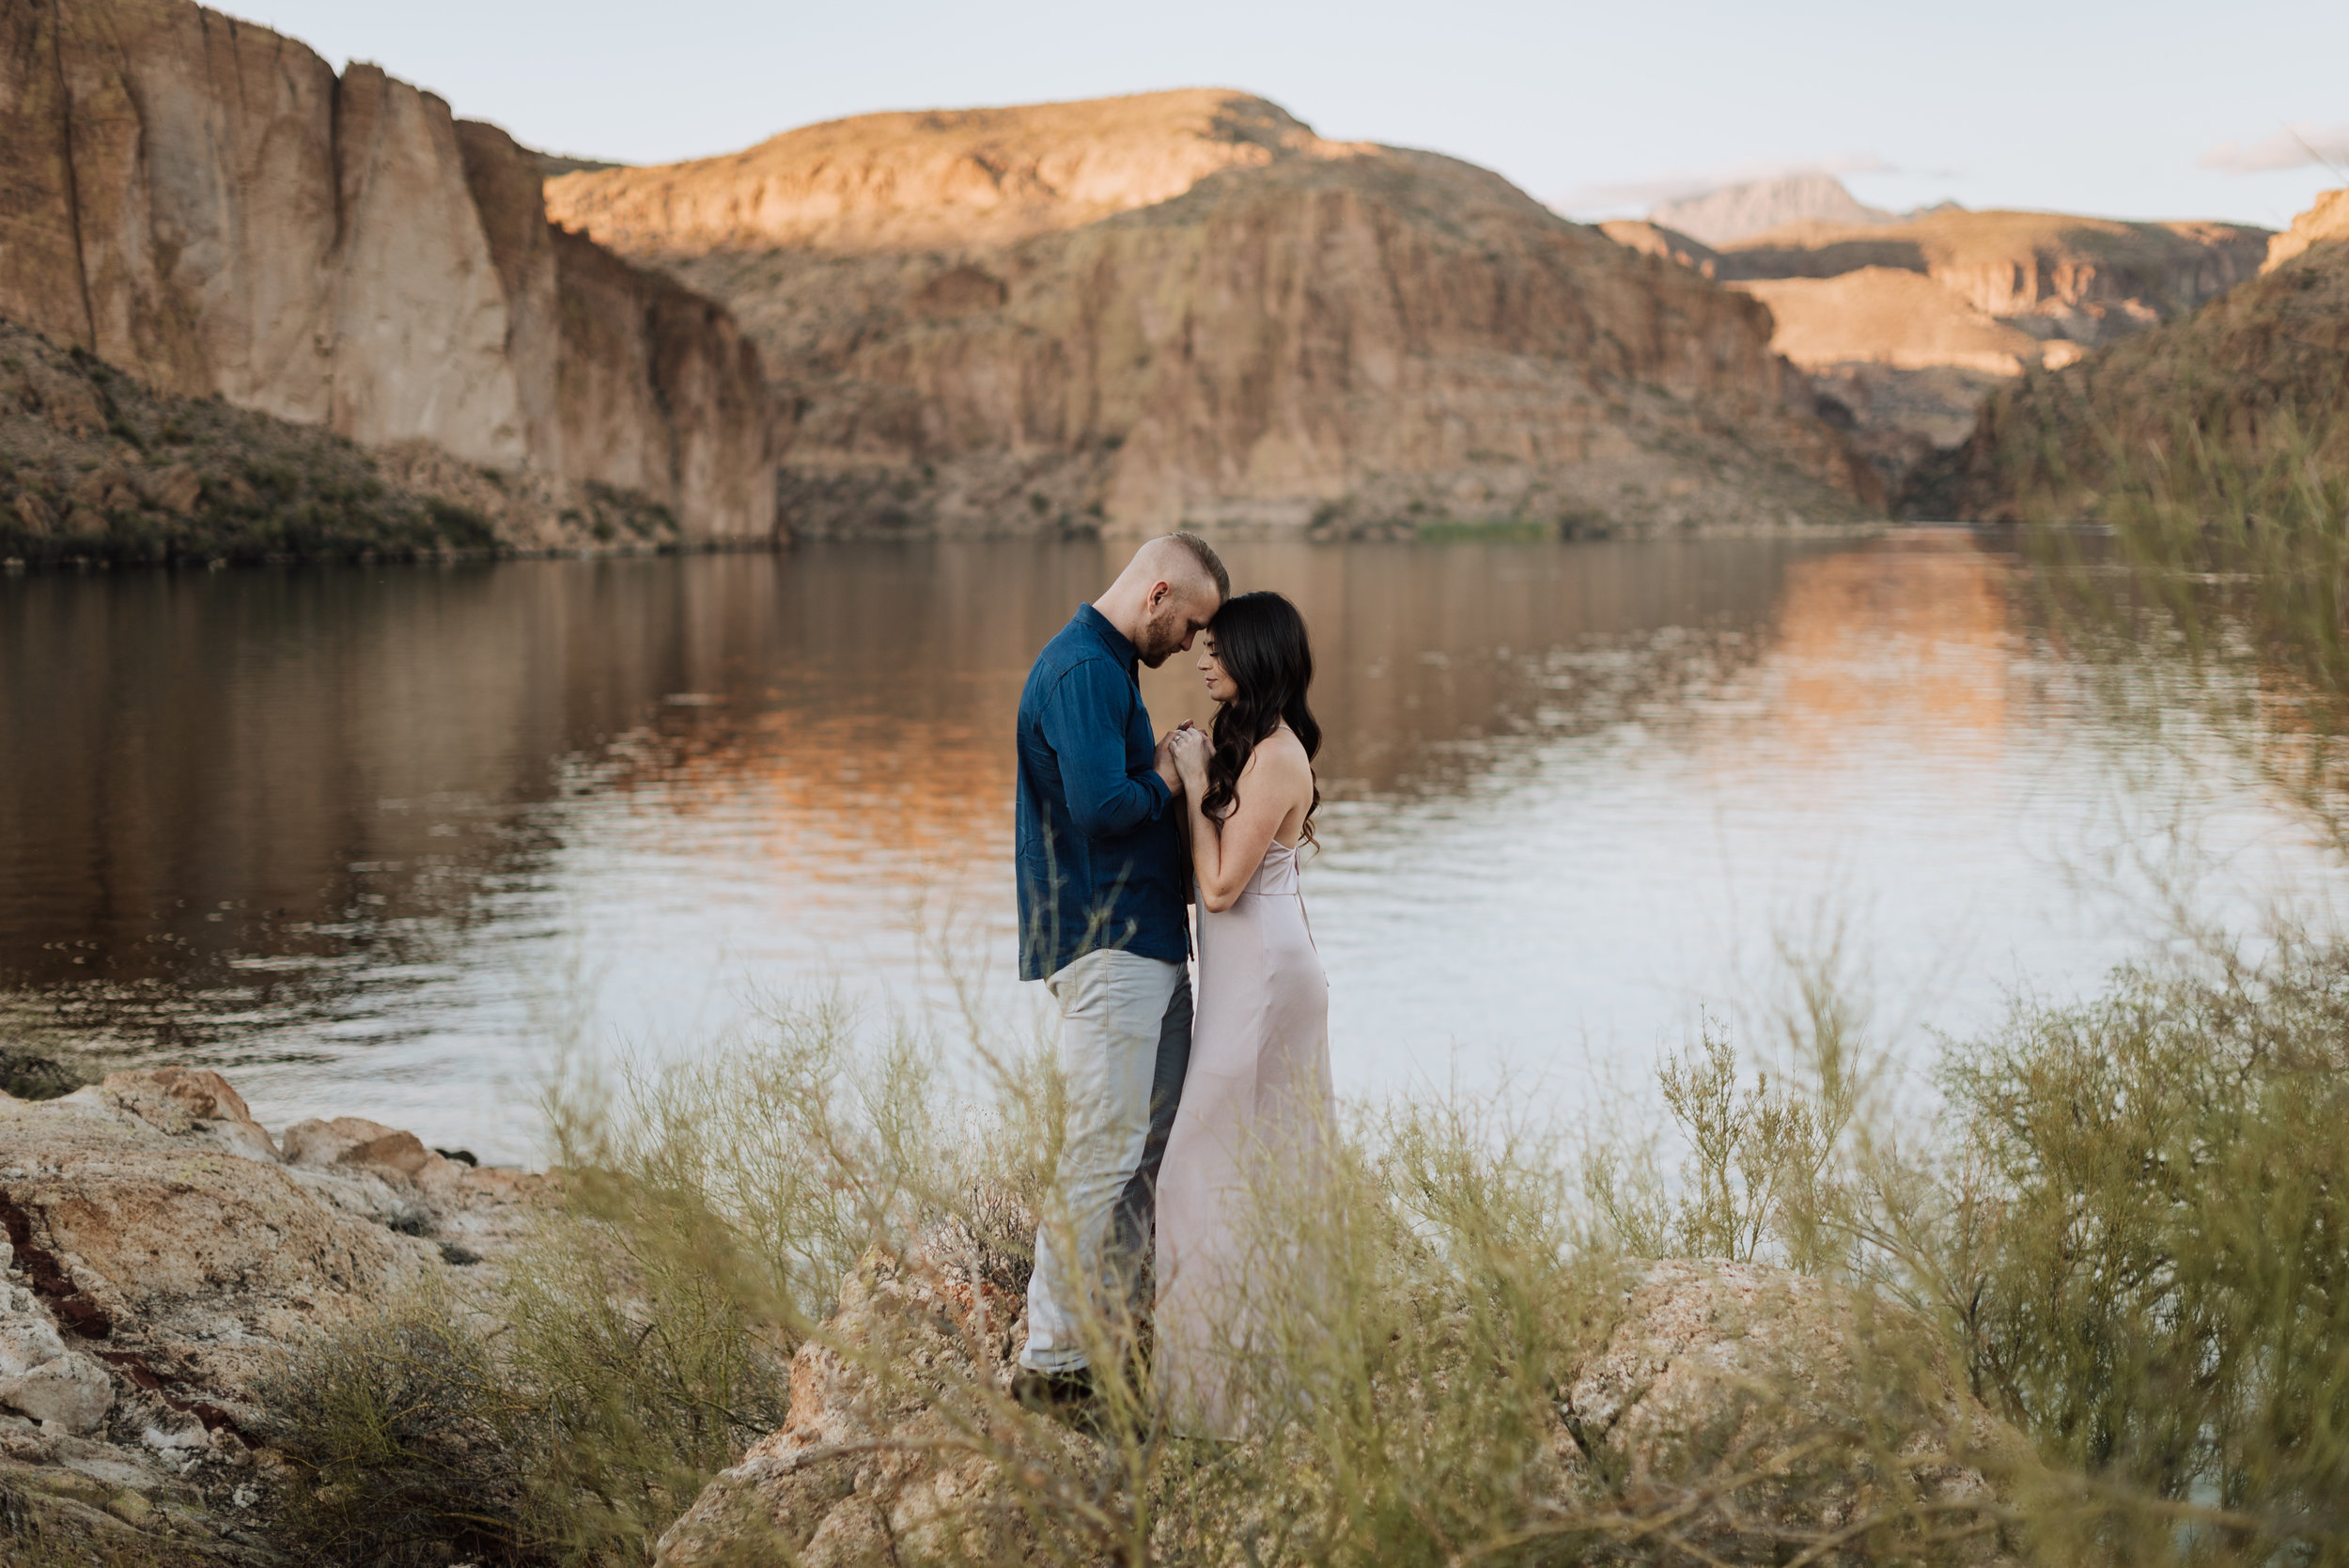 Canyon Lake Couples Photos in the Arizona Desert